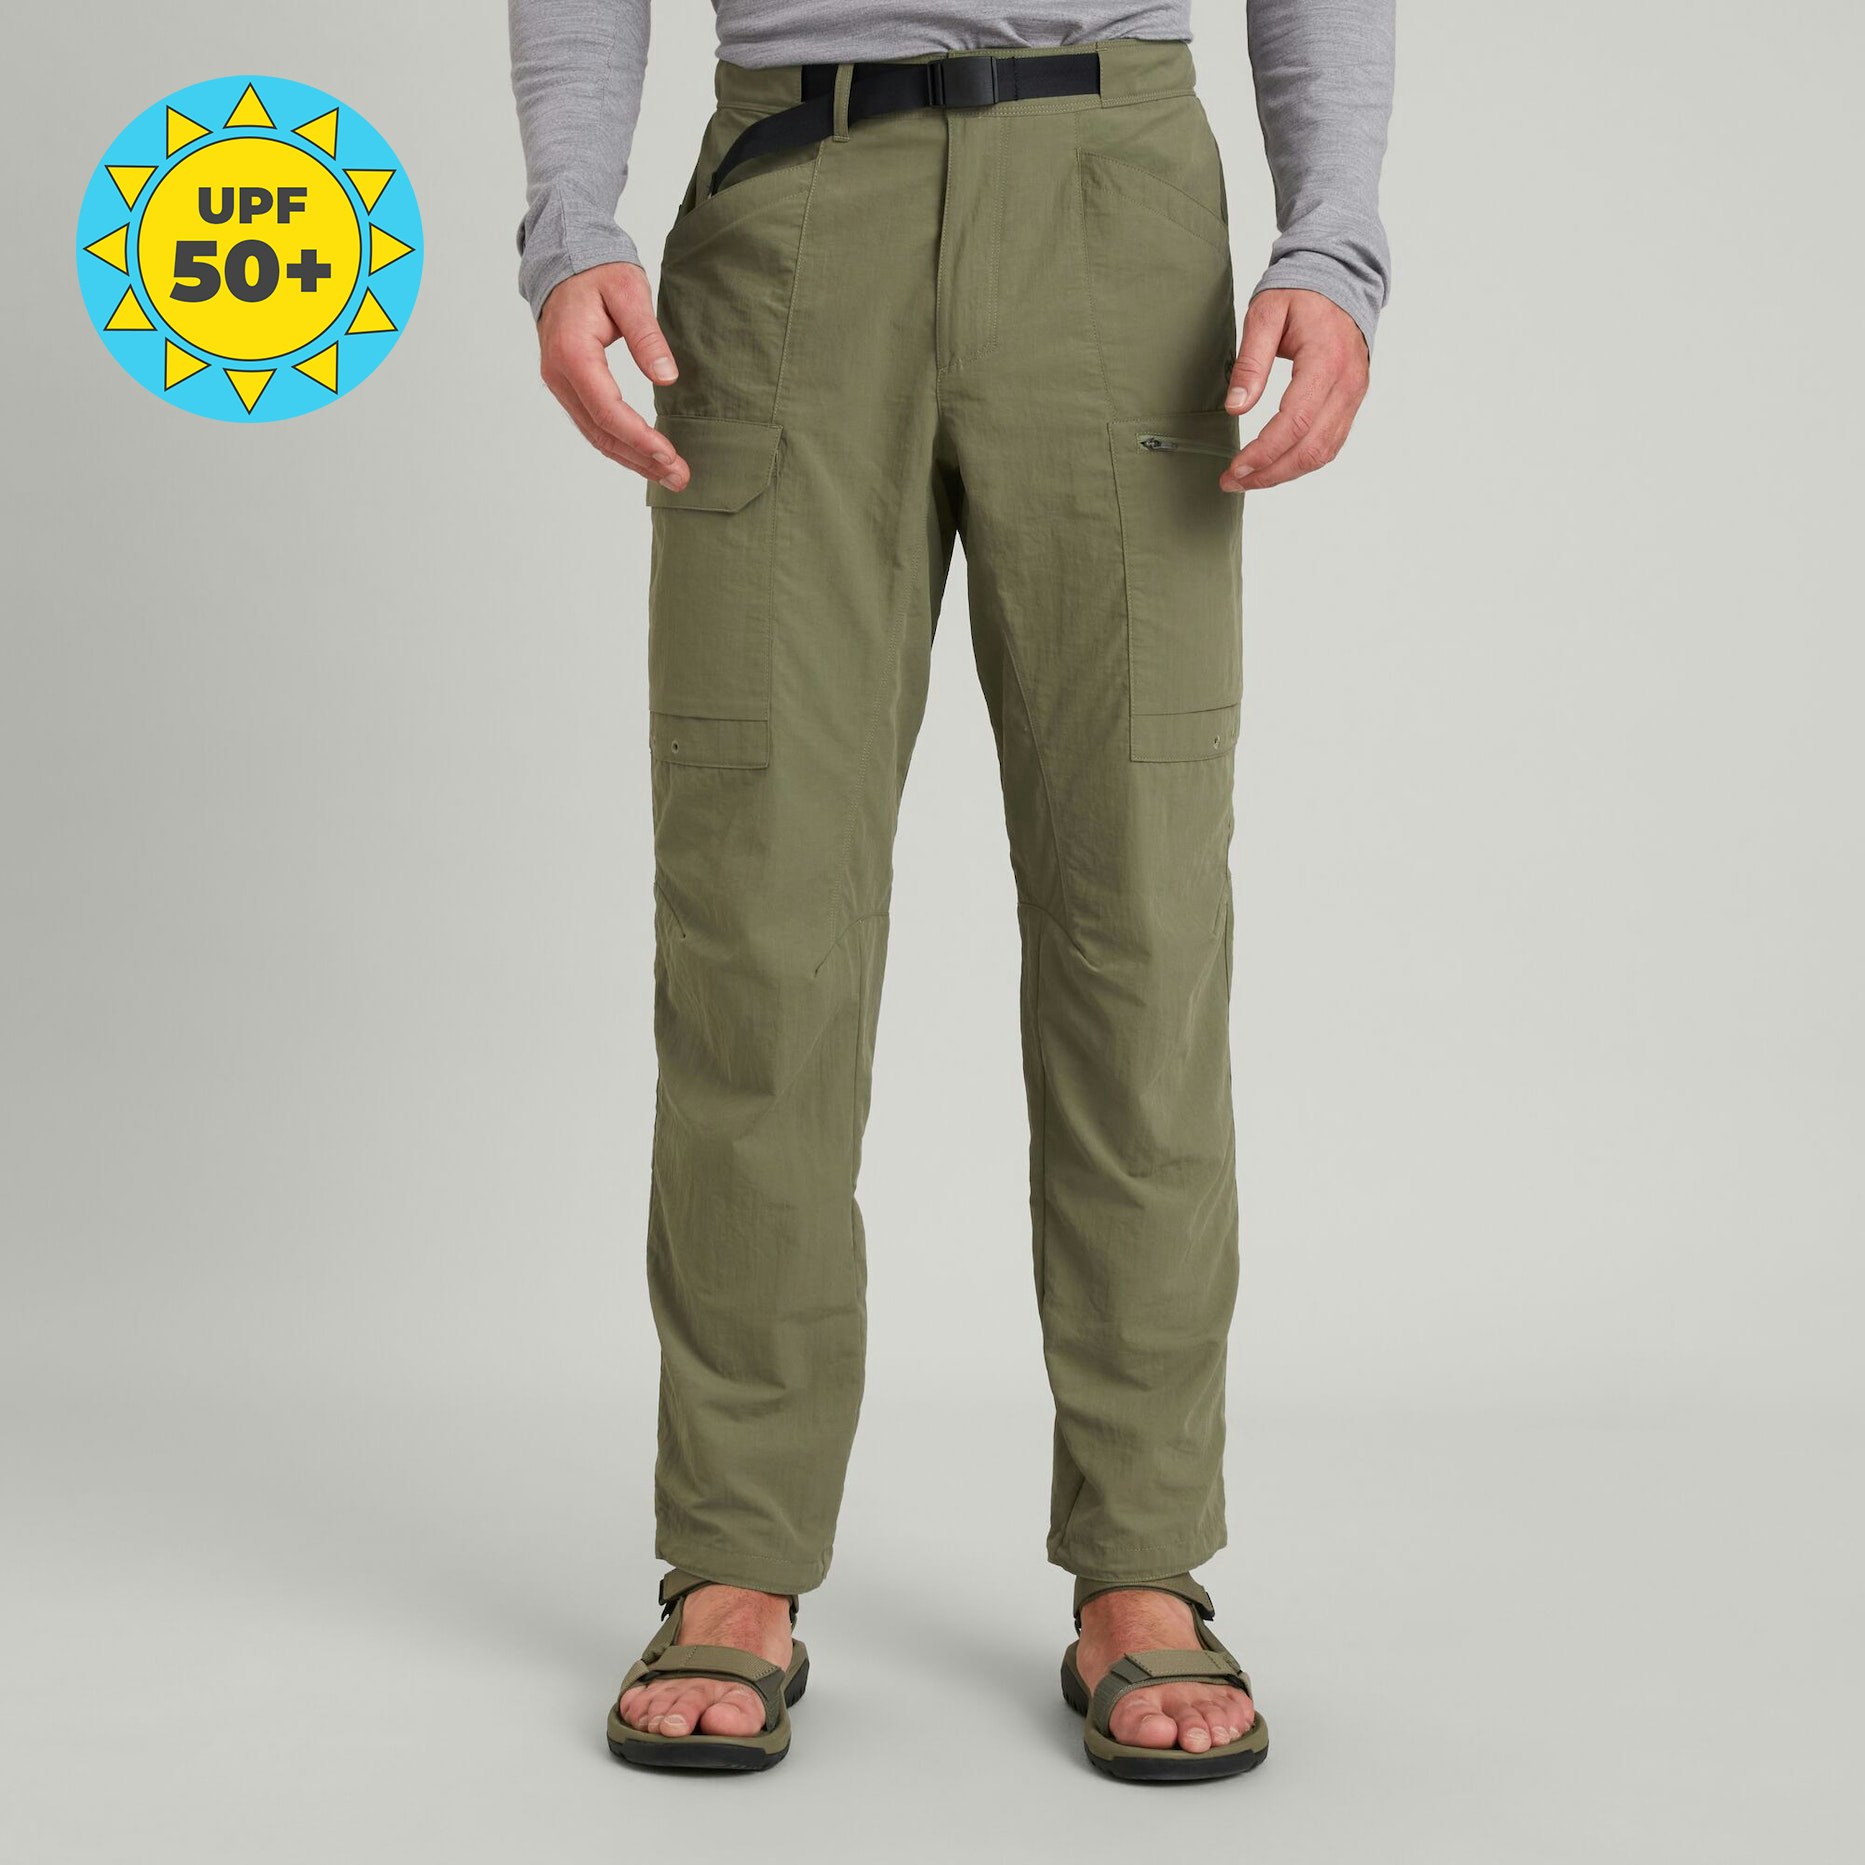 NEW Kathmandu Clark EPG Men's Versatile Zip Off Hiking Trousers Pants  Shorts | eBay